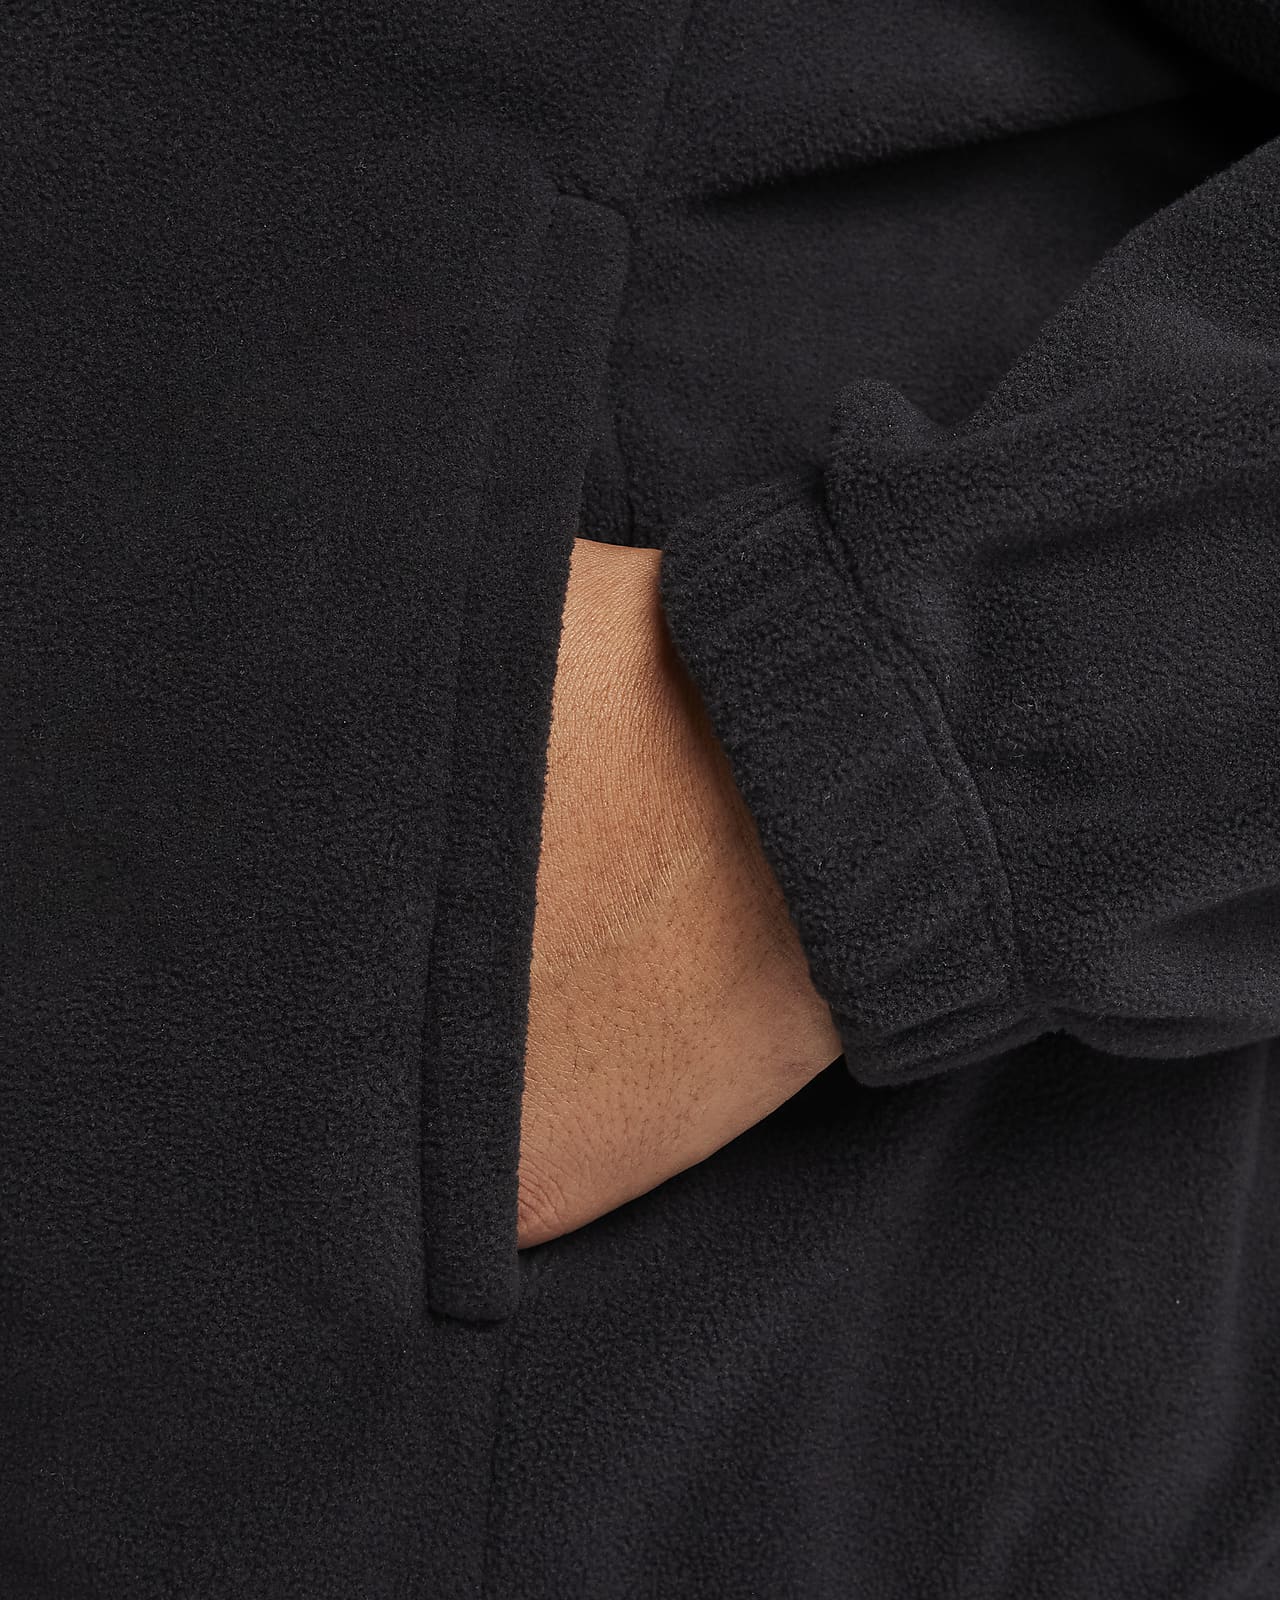 Nike Therma-FIT One Women's Fleece Full-Zip Jacket